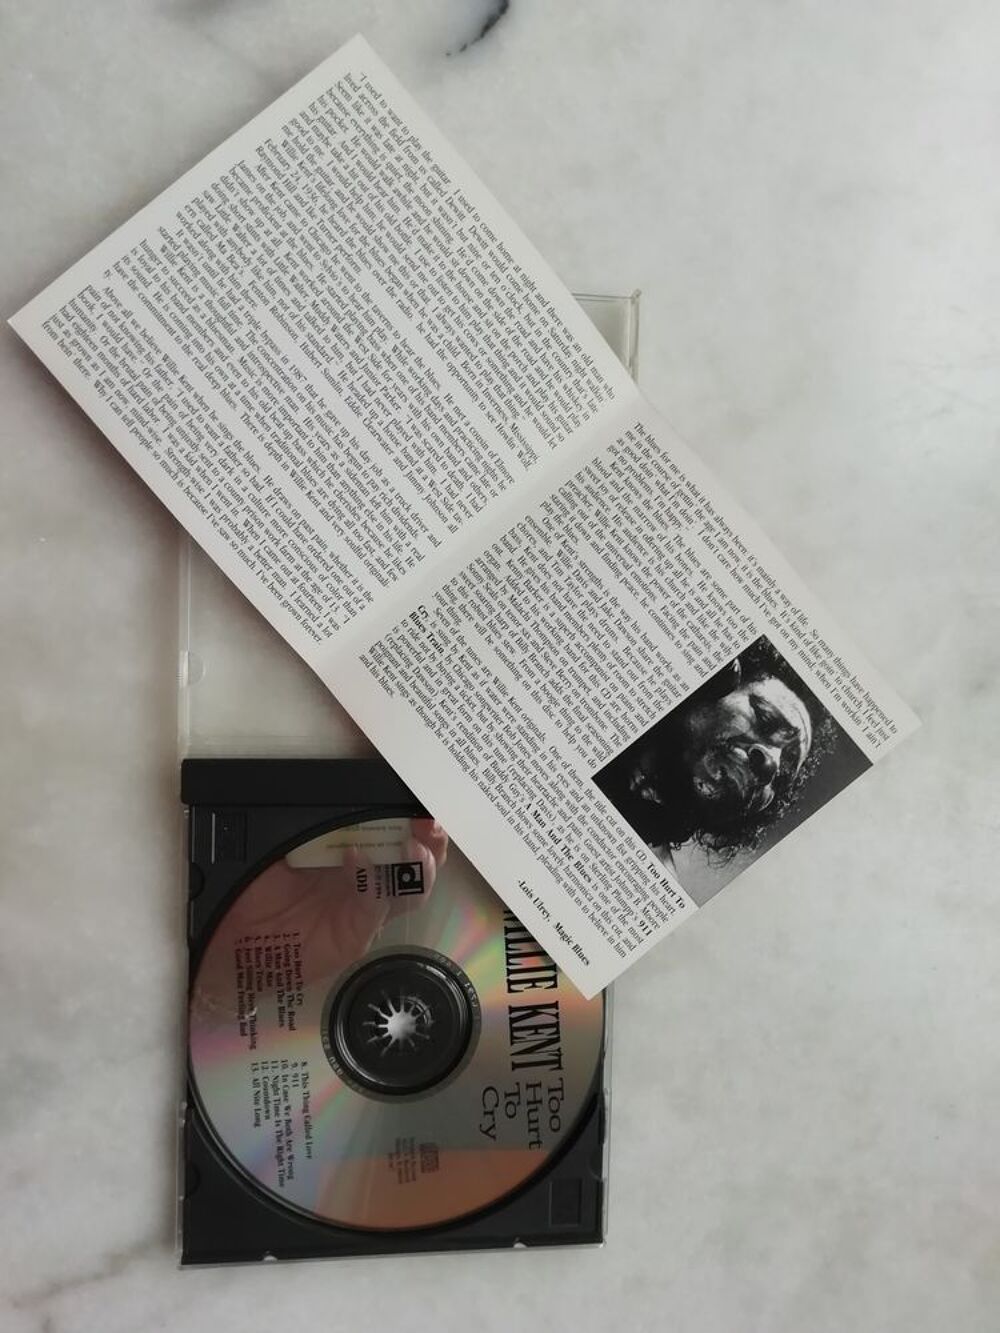 Willie KENT CD et vinyles